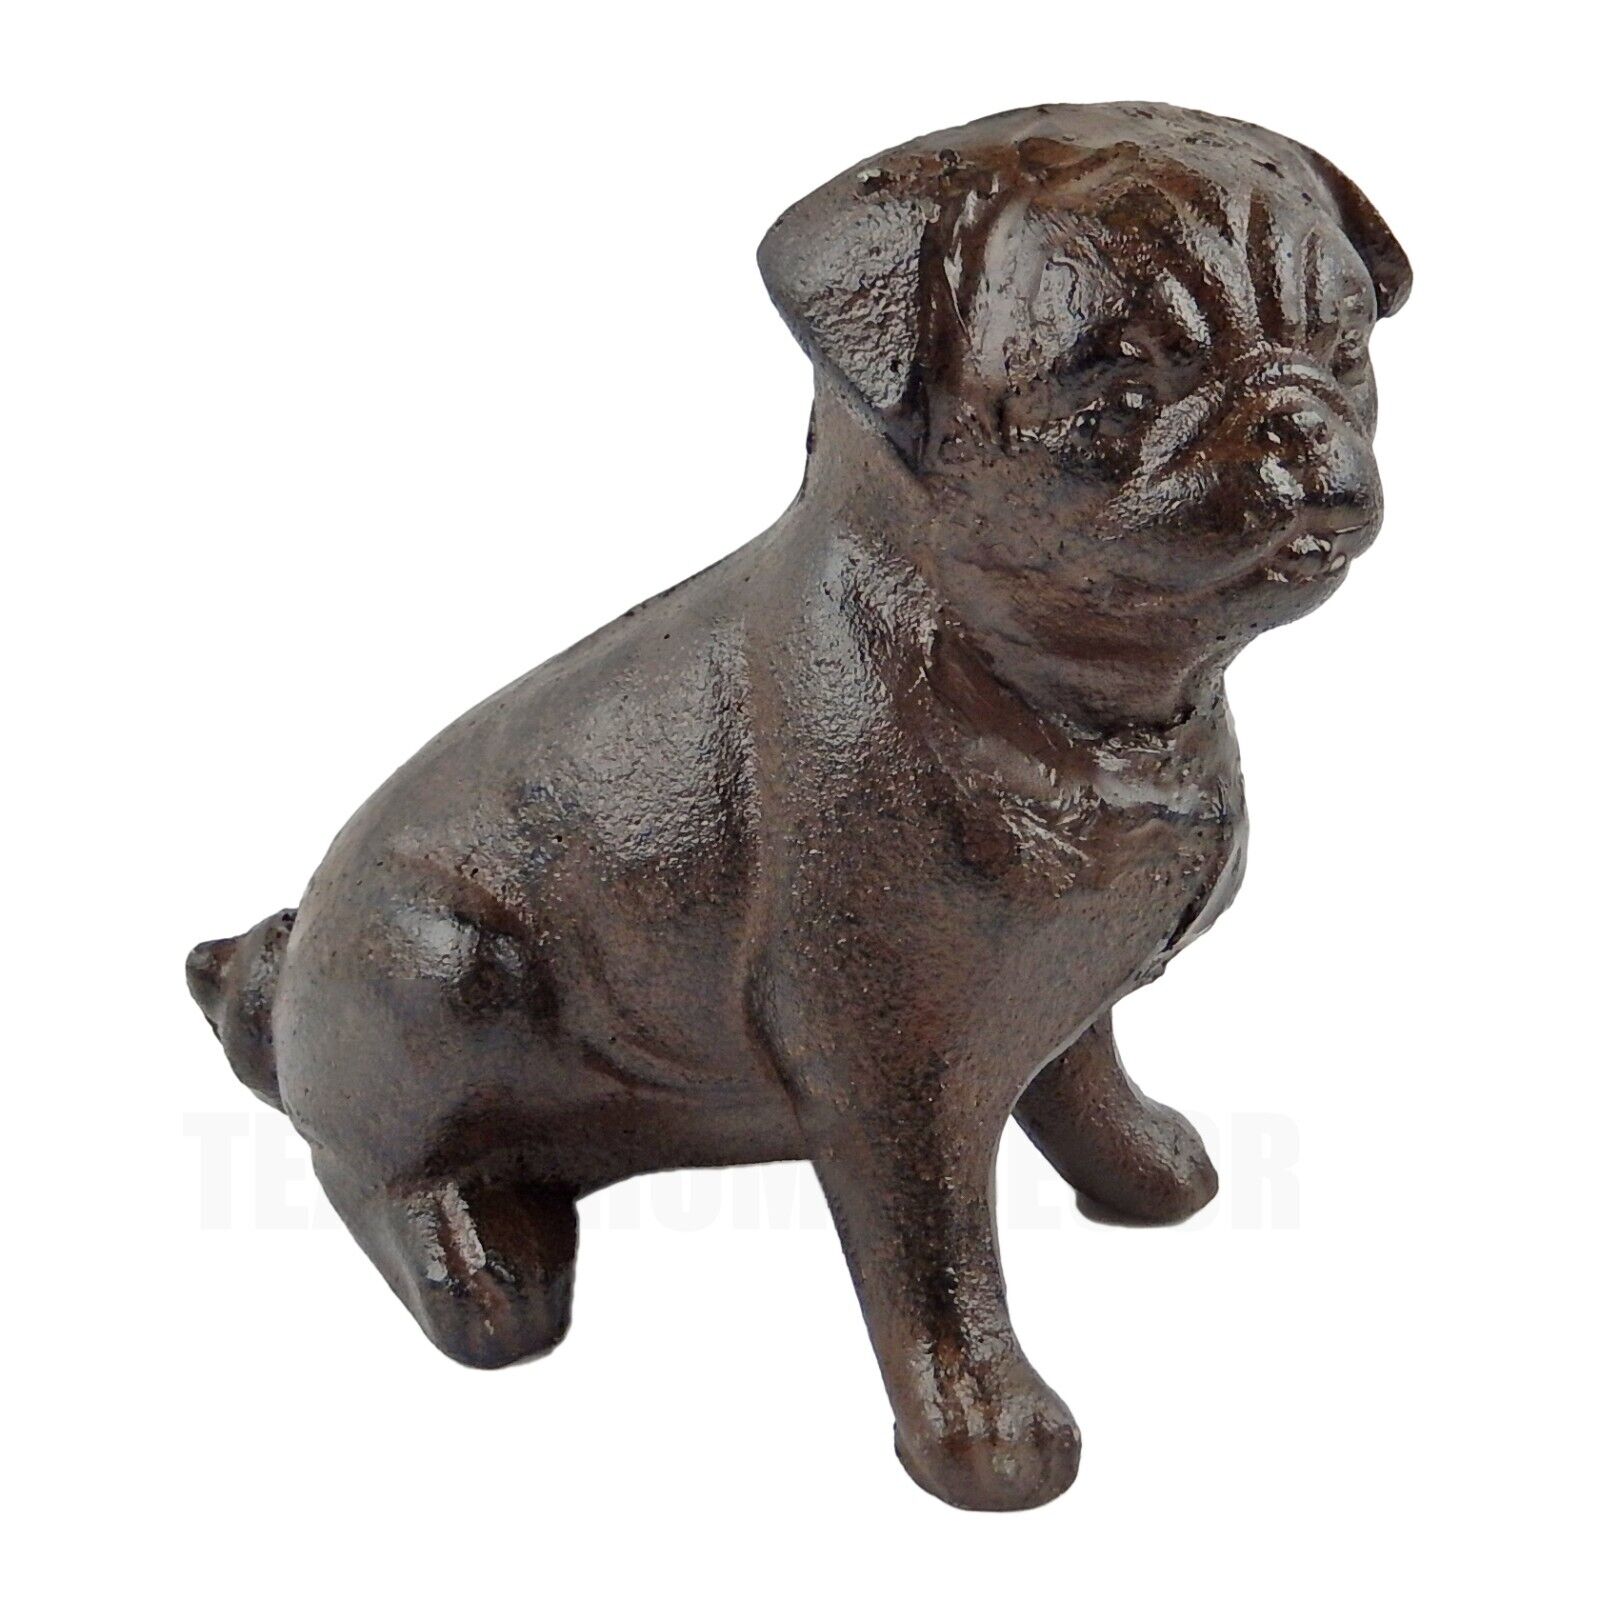 Cast Iron Pug Dog Figurine Statue Doorstop Rustic Brown Finish 4.5 inch Tall